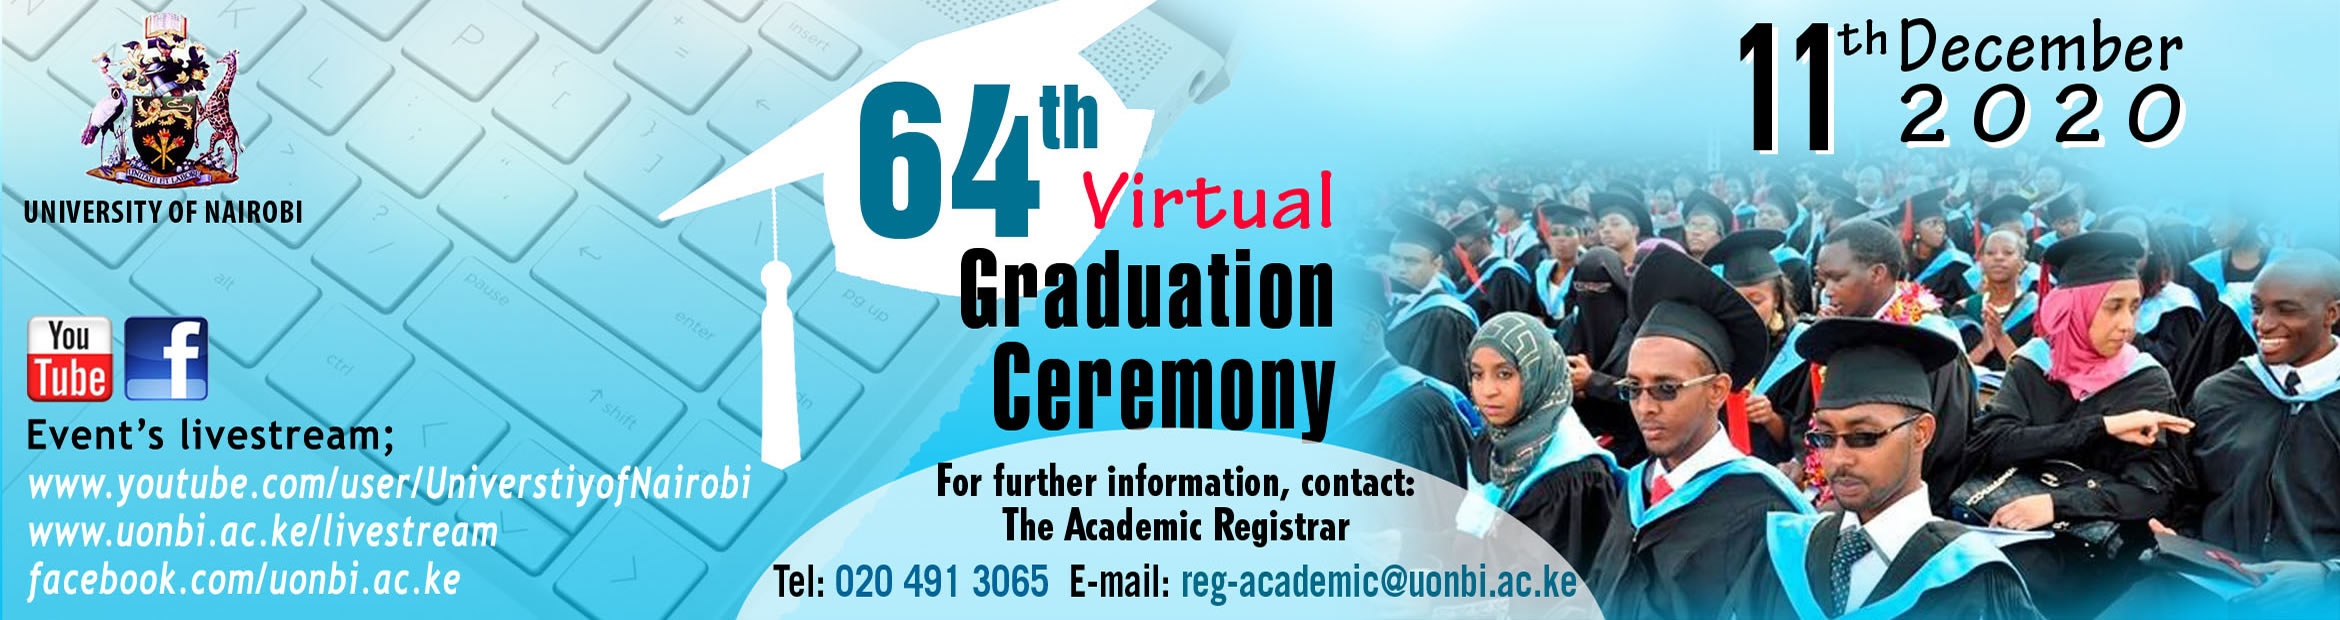 University of Nairobi 64th Graduation Ceremony